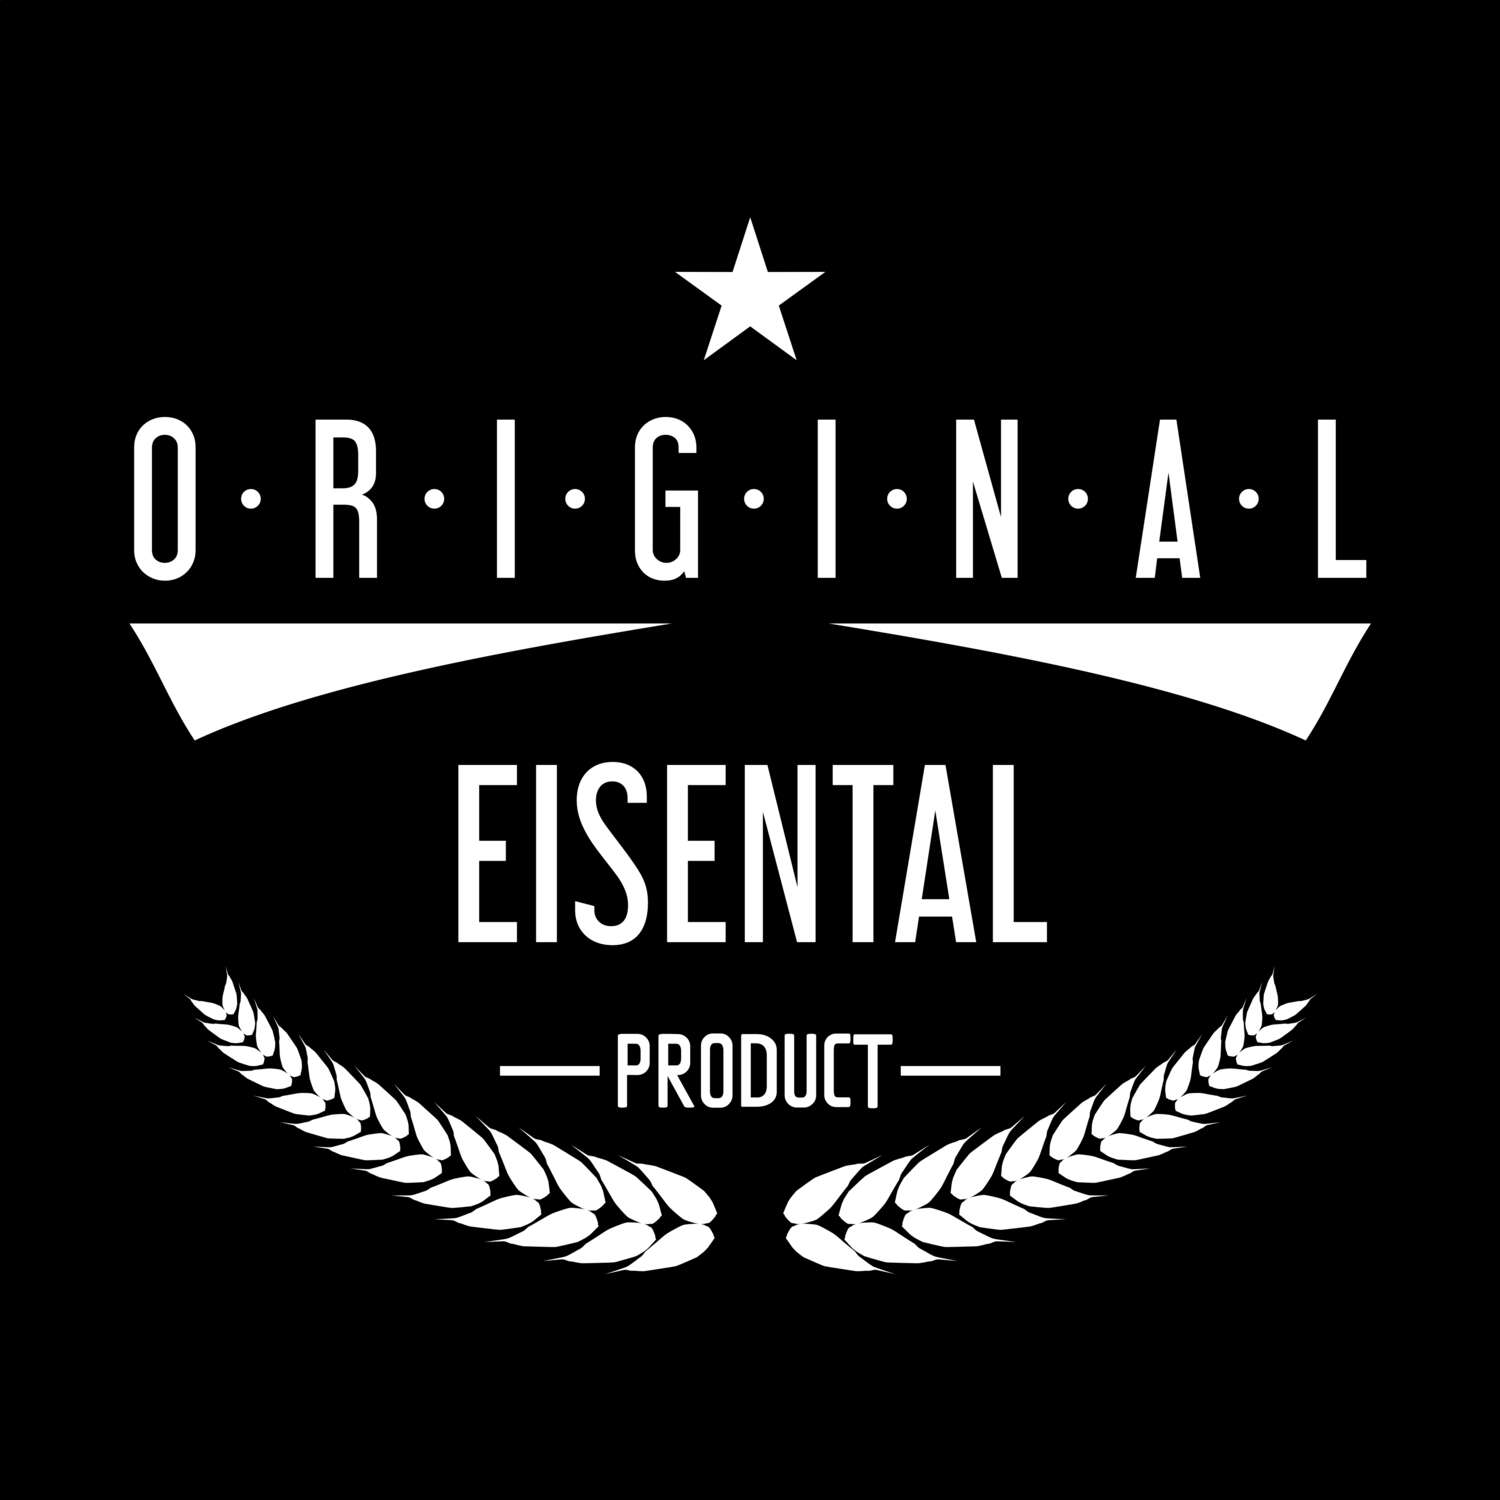 Eisental T-Shirt »Original Product«